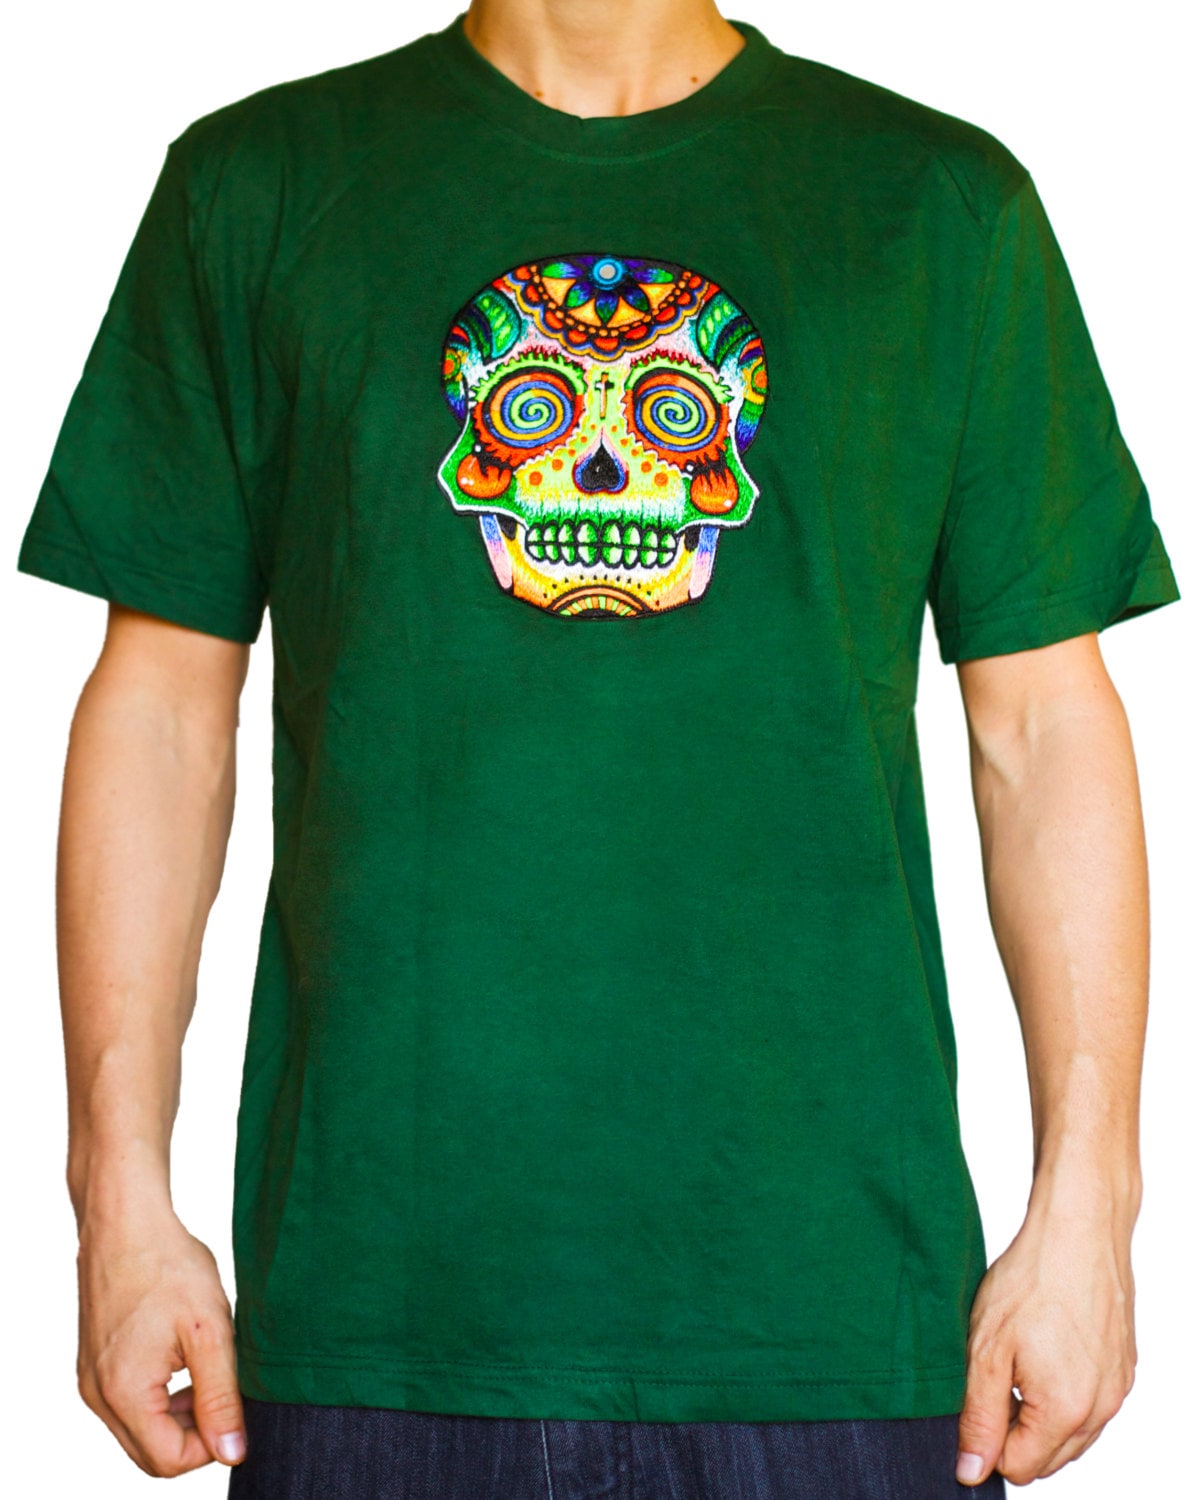 Spiral skull T-Shirt with mirror blacklight handmade embroidery no print goa psy t-shirt